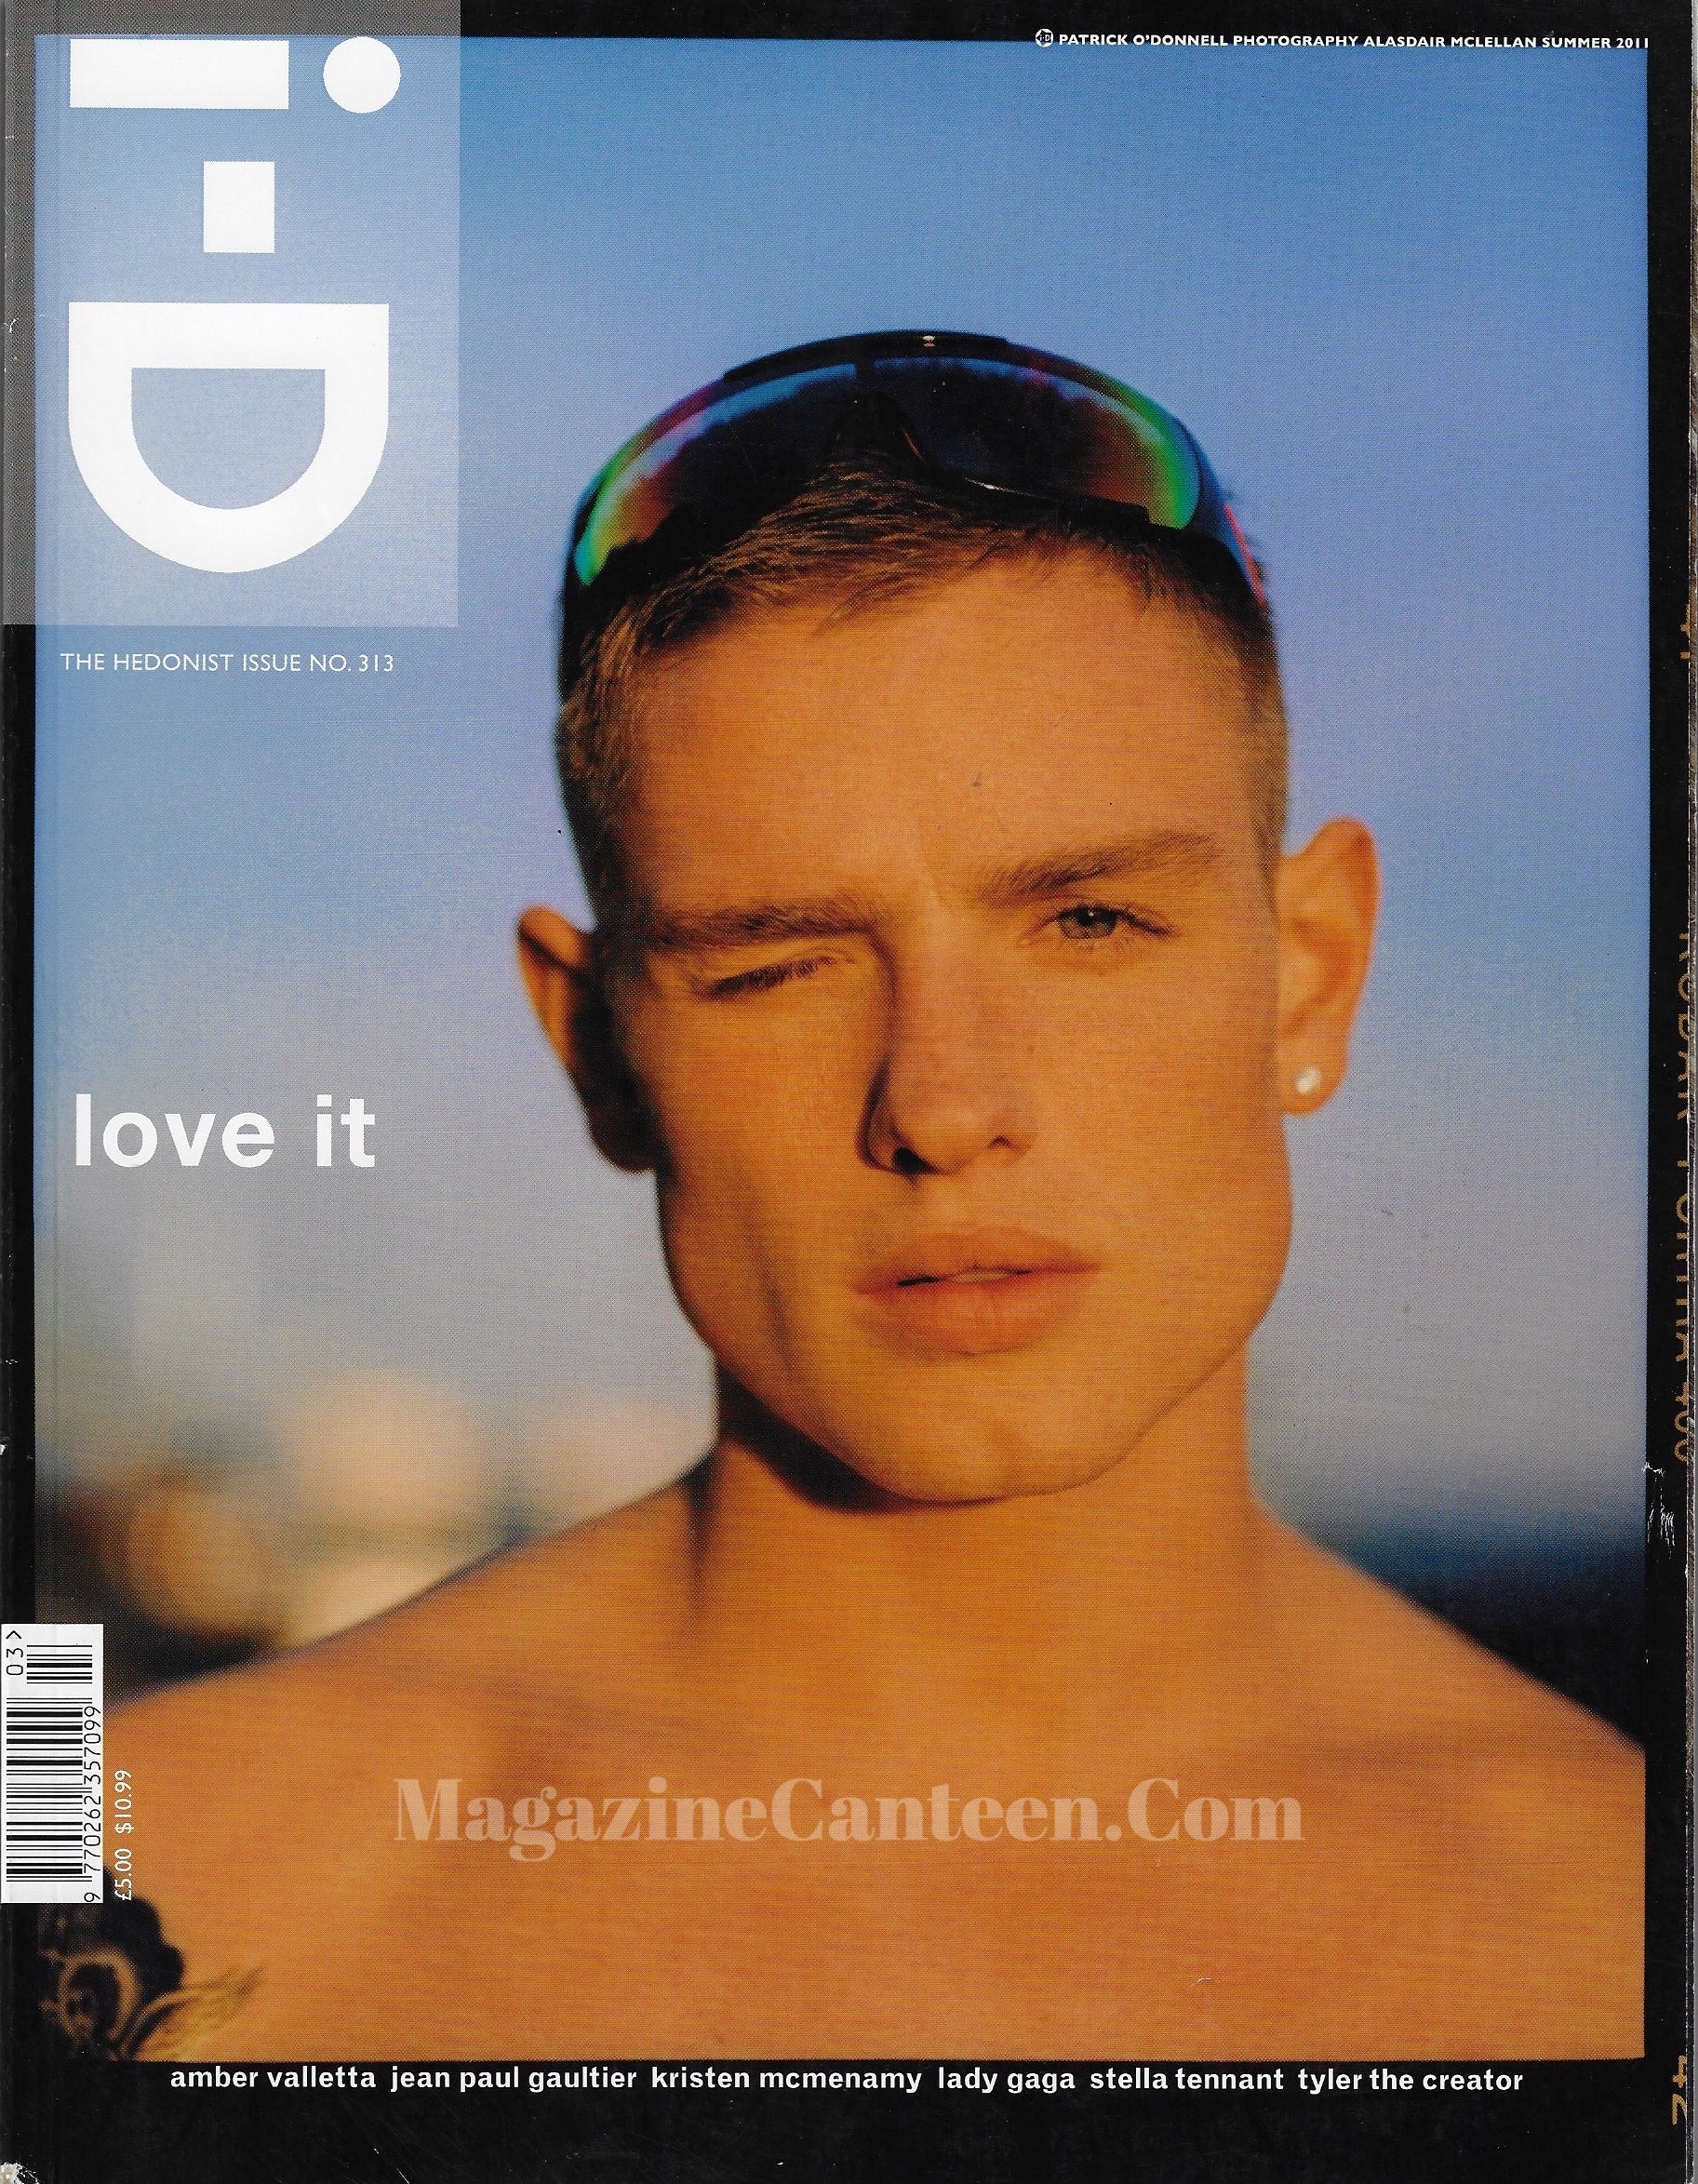 I-D Magazine 313 - Patrick O'Donnell 2011